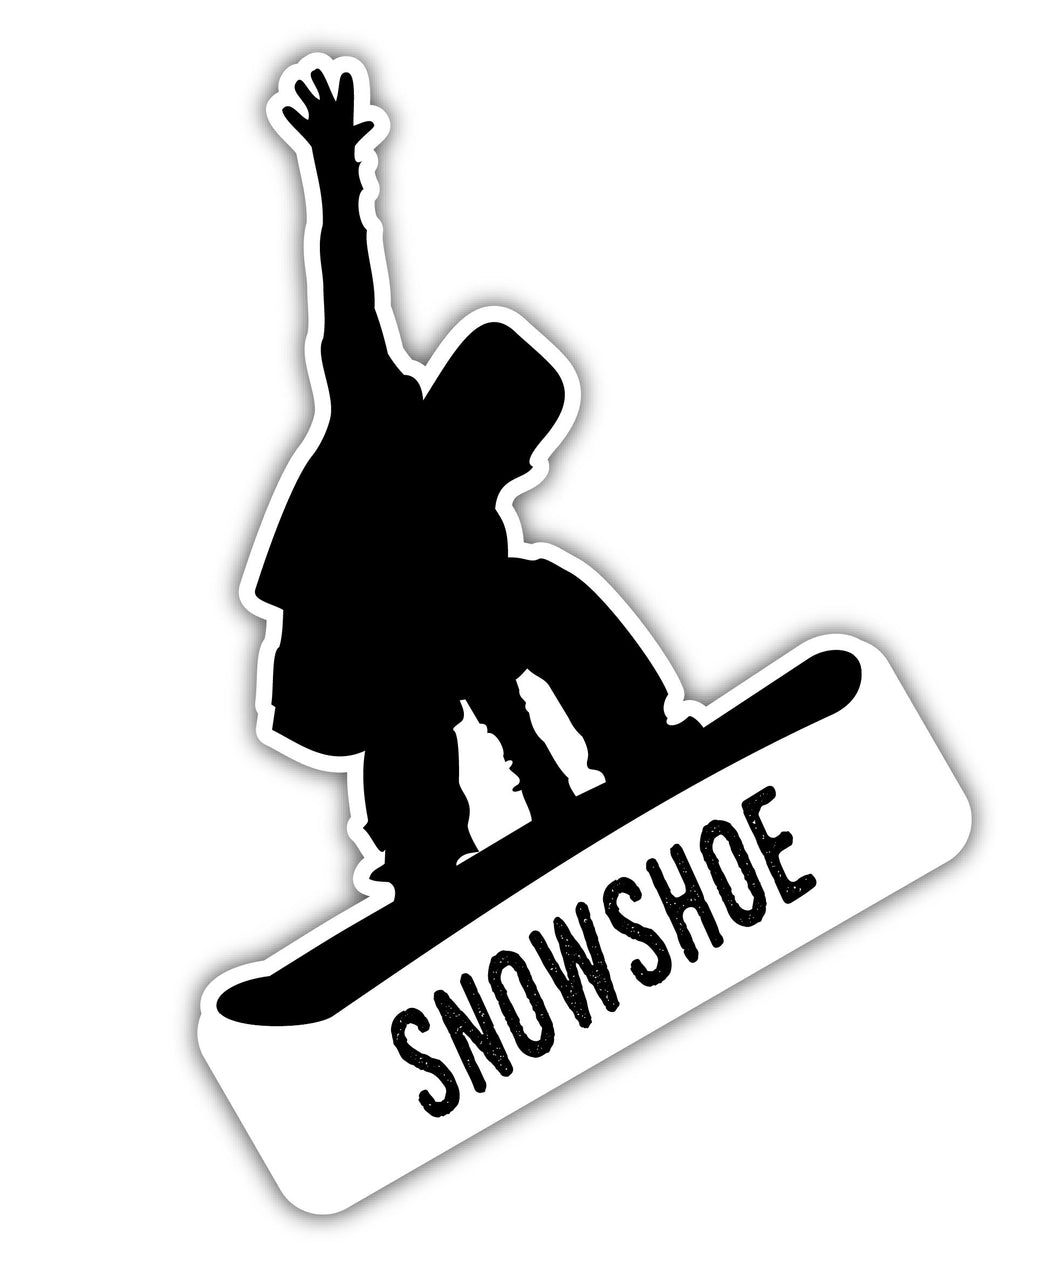 Snowshoe West Virginia Ski Adventures Souvenir Approximately 5 x 2.5-Inch Vinyl Decal Sticker Goggle Design